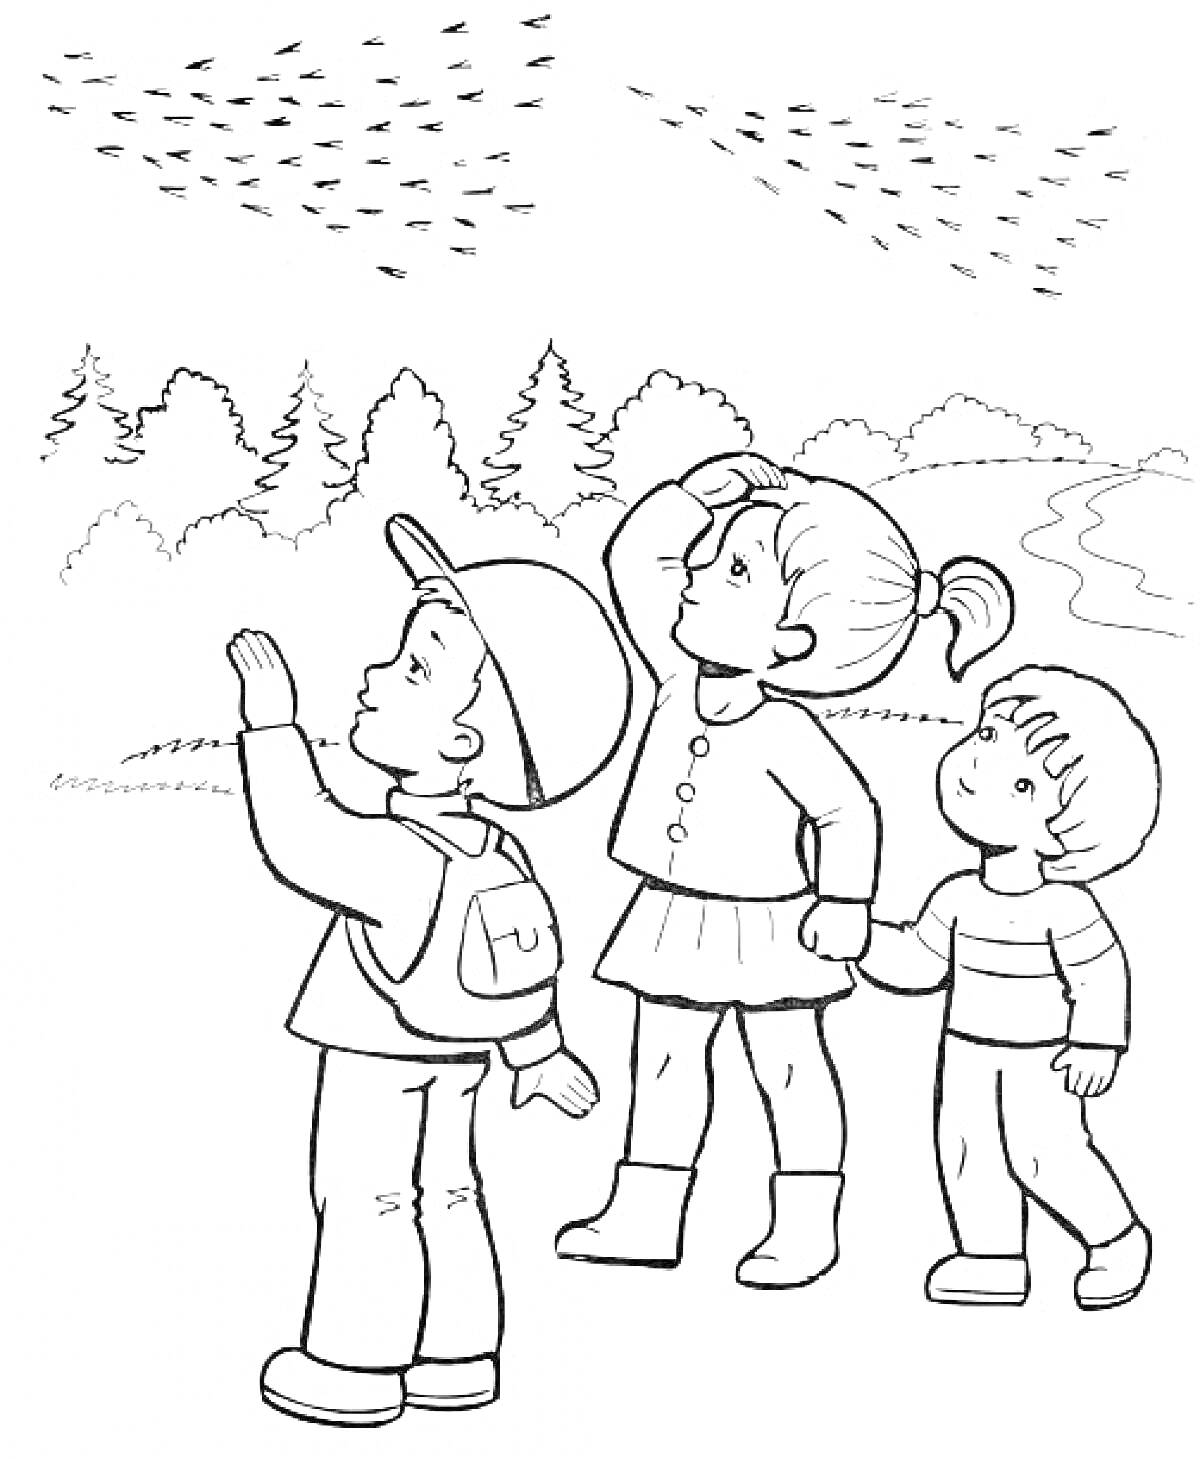 Дети смотрят на стаю птиц на фоне осеннего леса и реки